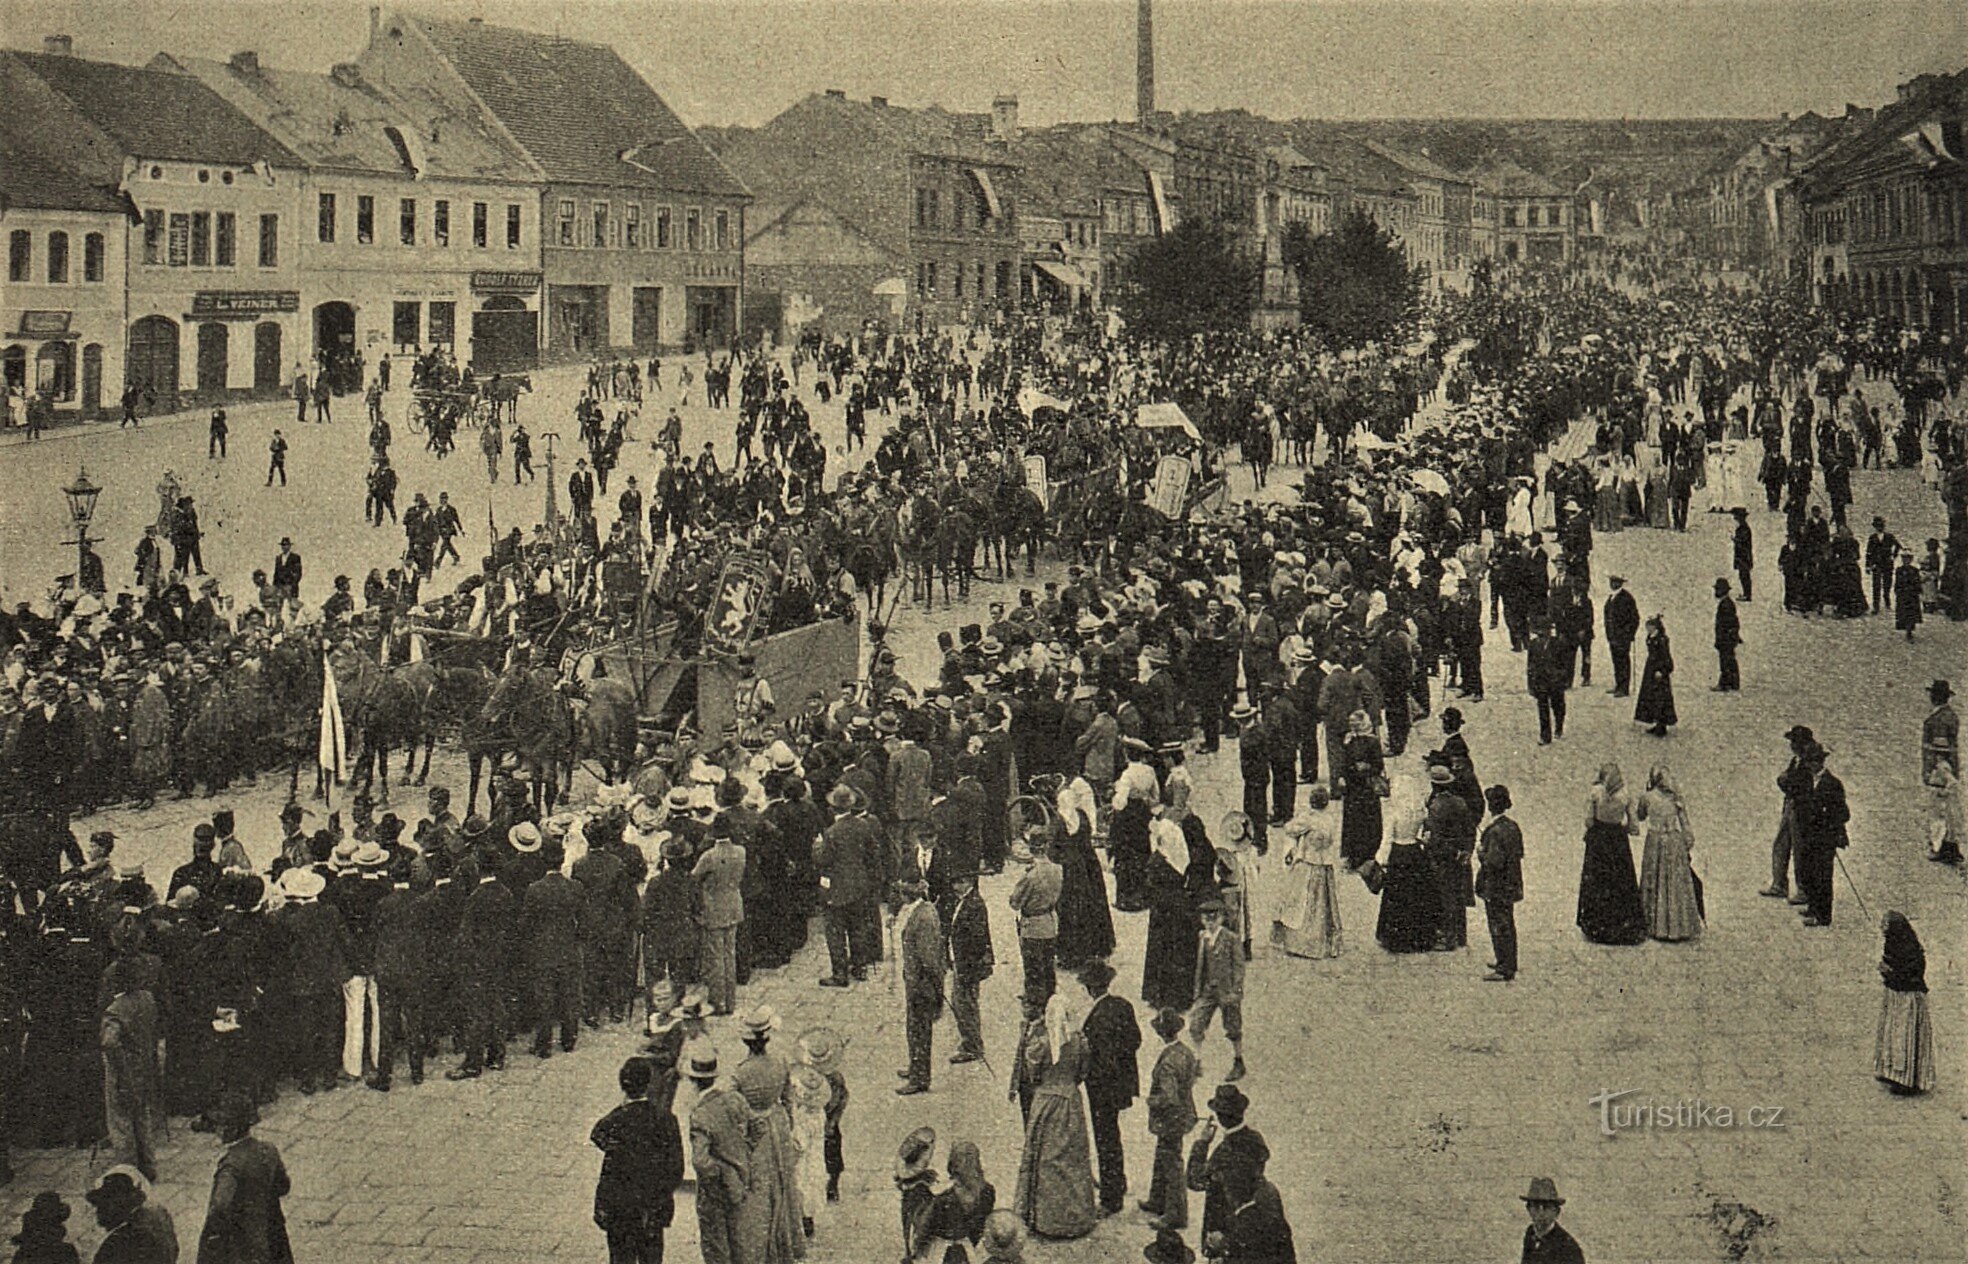 Hussite celebration in Hořice in 1903